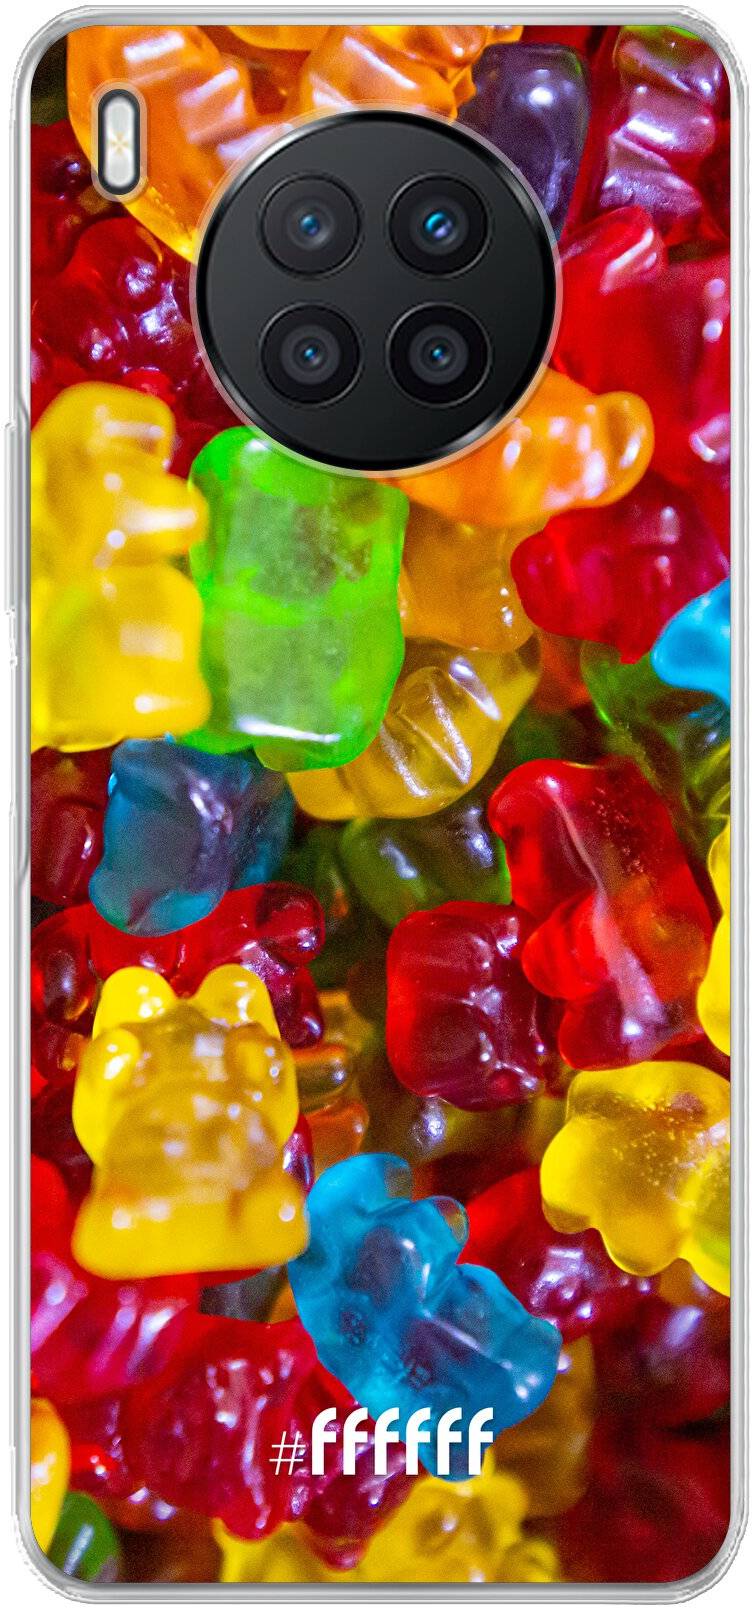 Gummy Bears Nova 8i